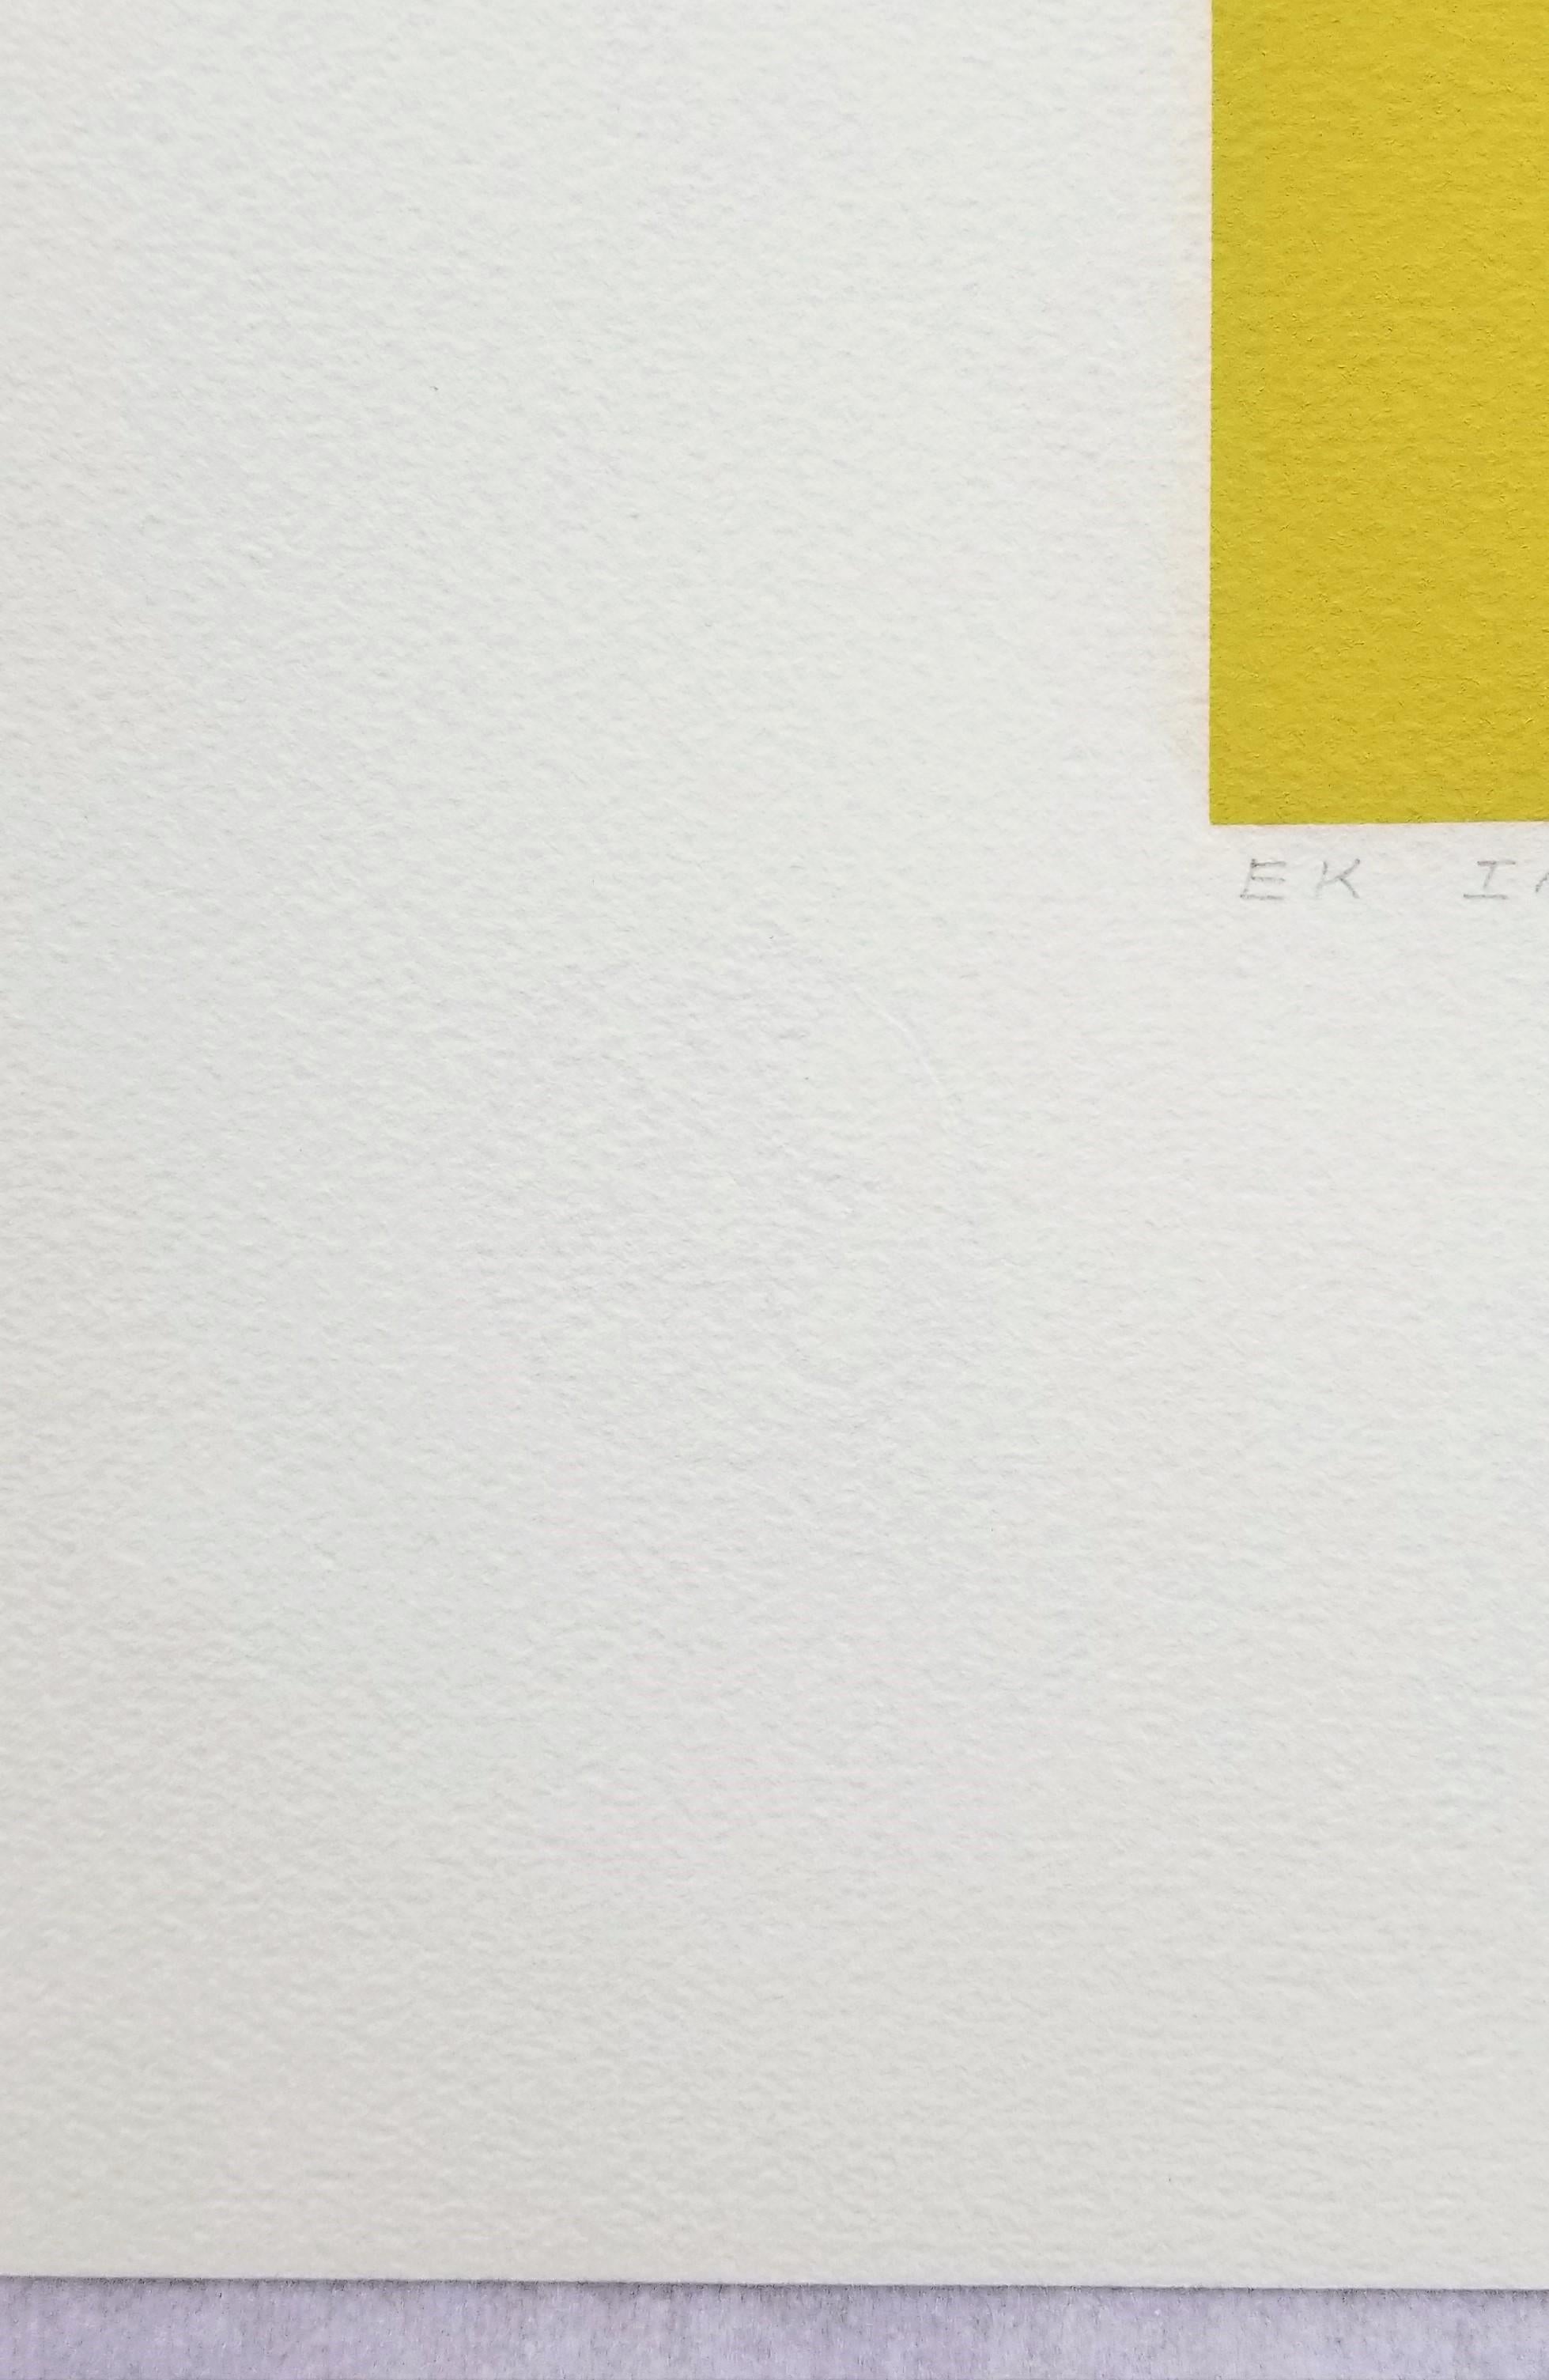 EK Ic /// Bauhaus Abstract Geometric Josef Albers Minimalism Yellow Screenprint 8